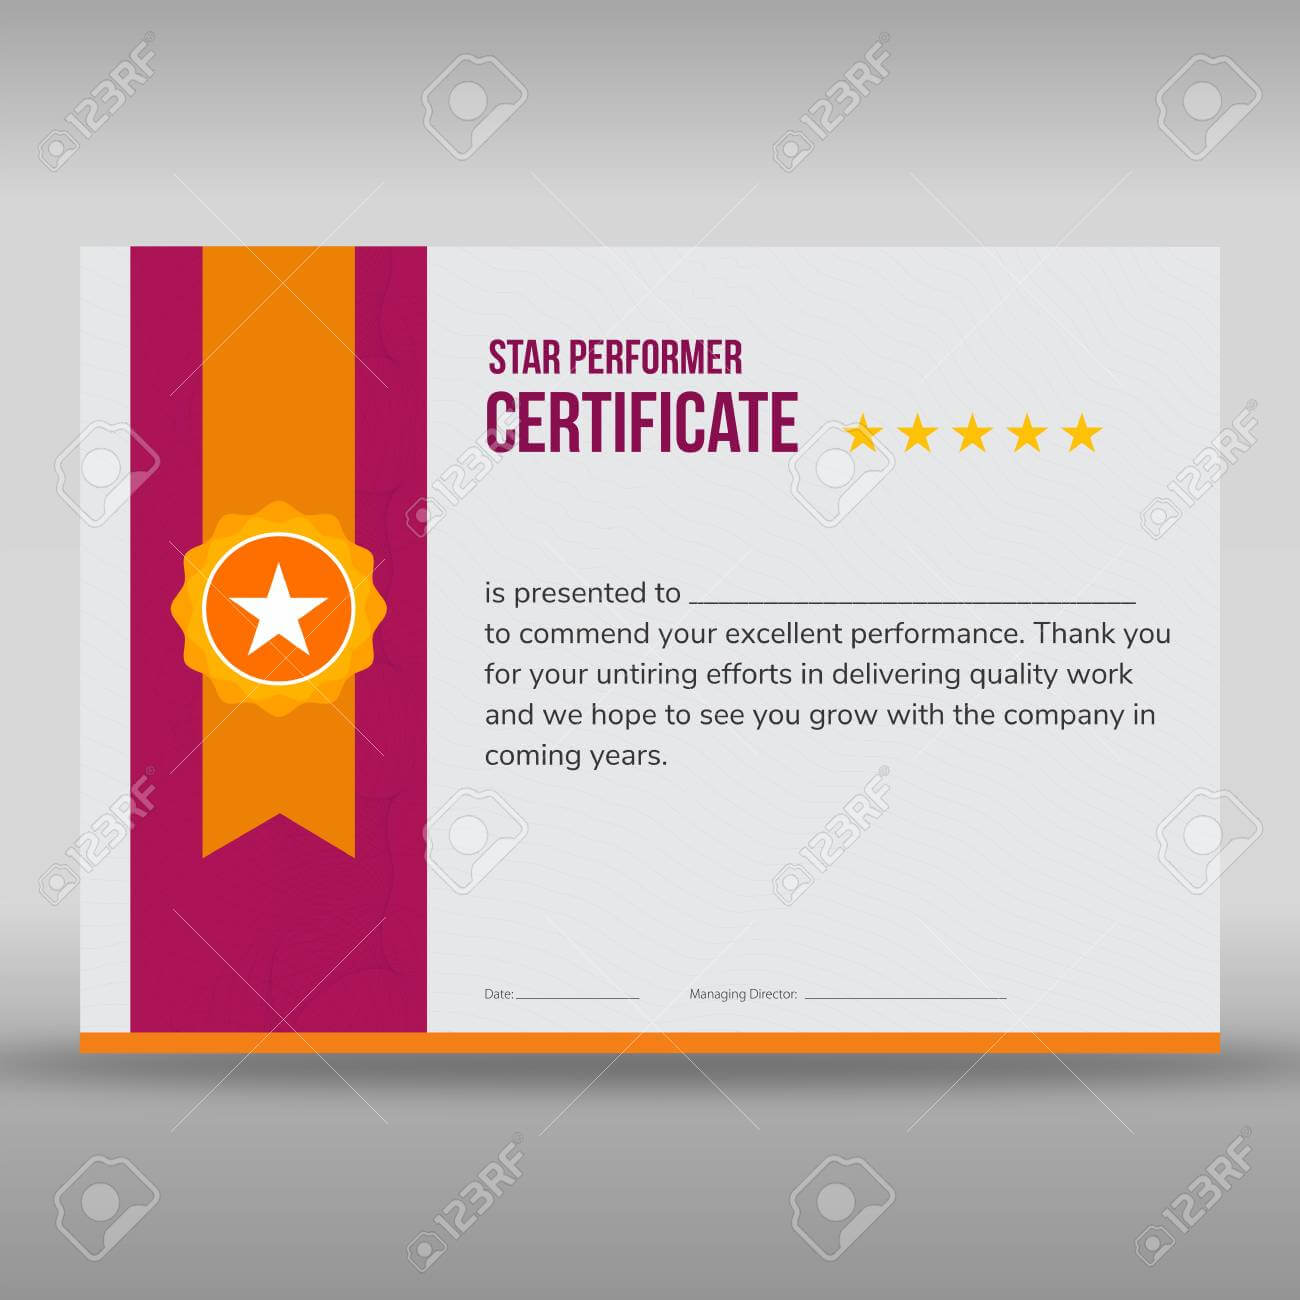 Star Performer Certificate Templates – Yatay With Regard To Star Performer Certificate Templates